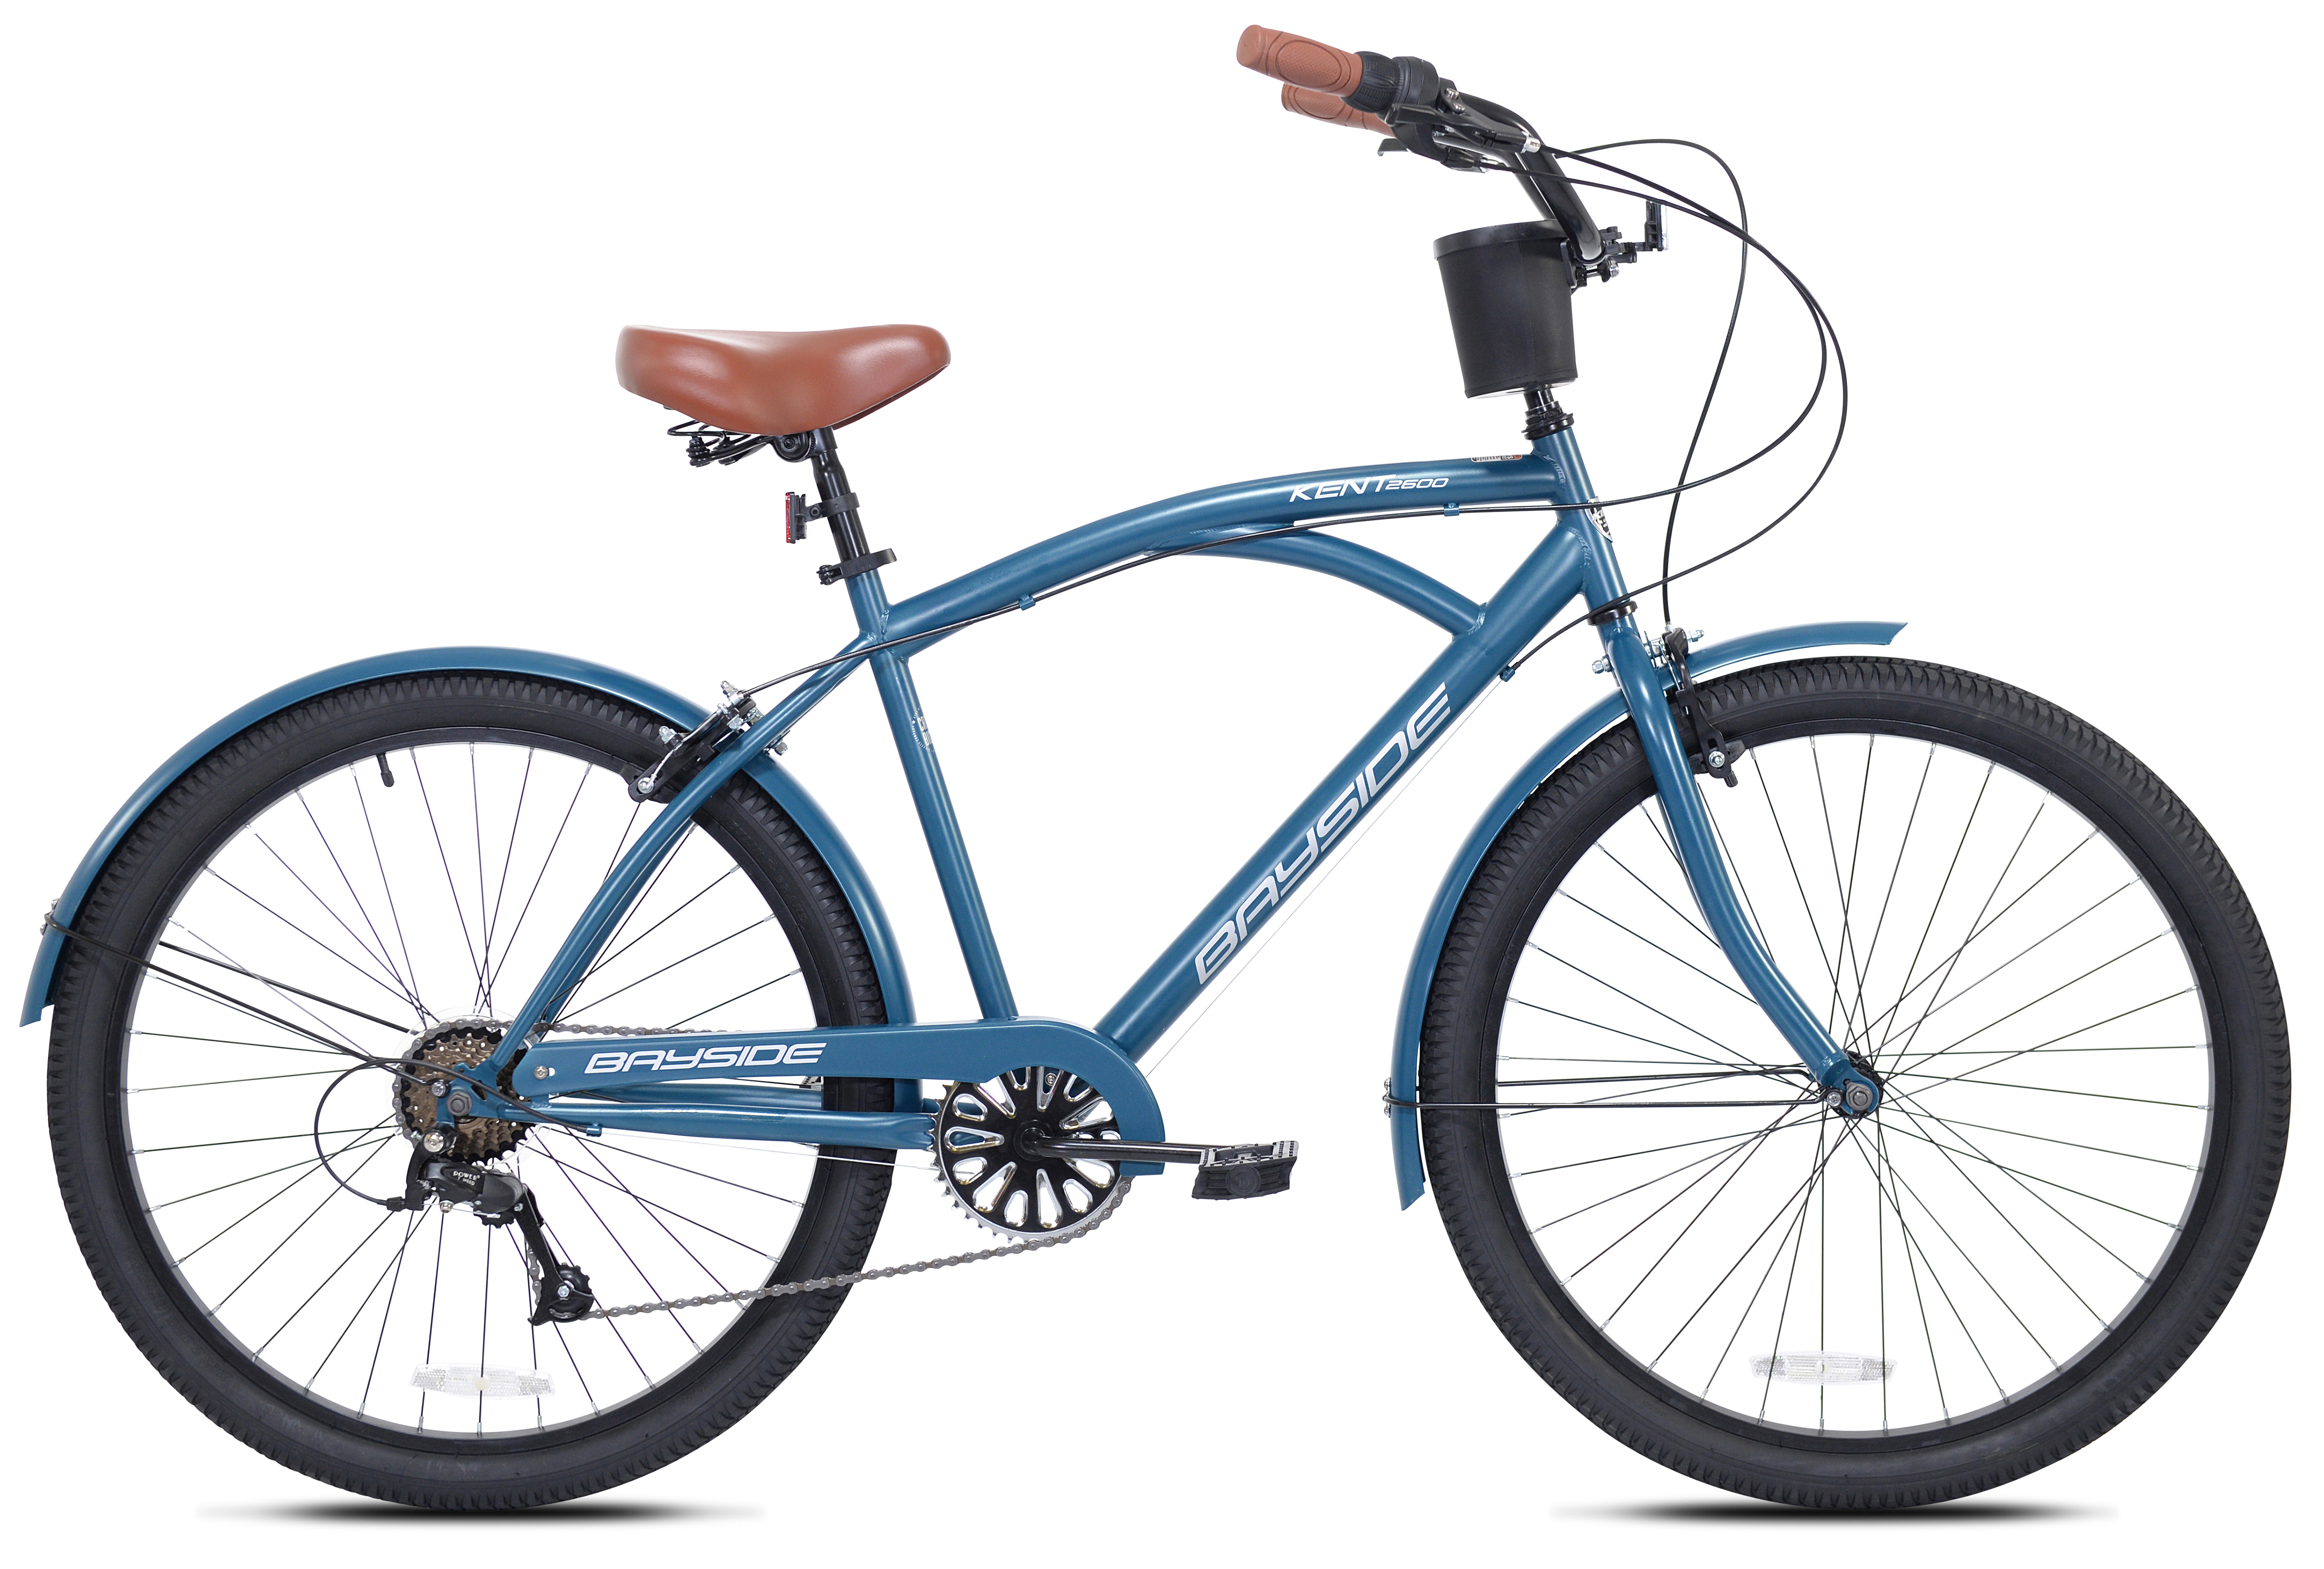 Kent Bicycle 26-inch Bayside Men's Cruiser Bicycle, Blue - image 1 of 8